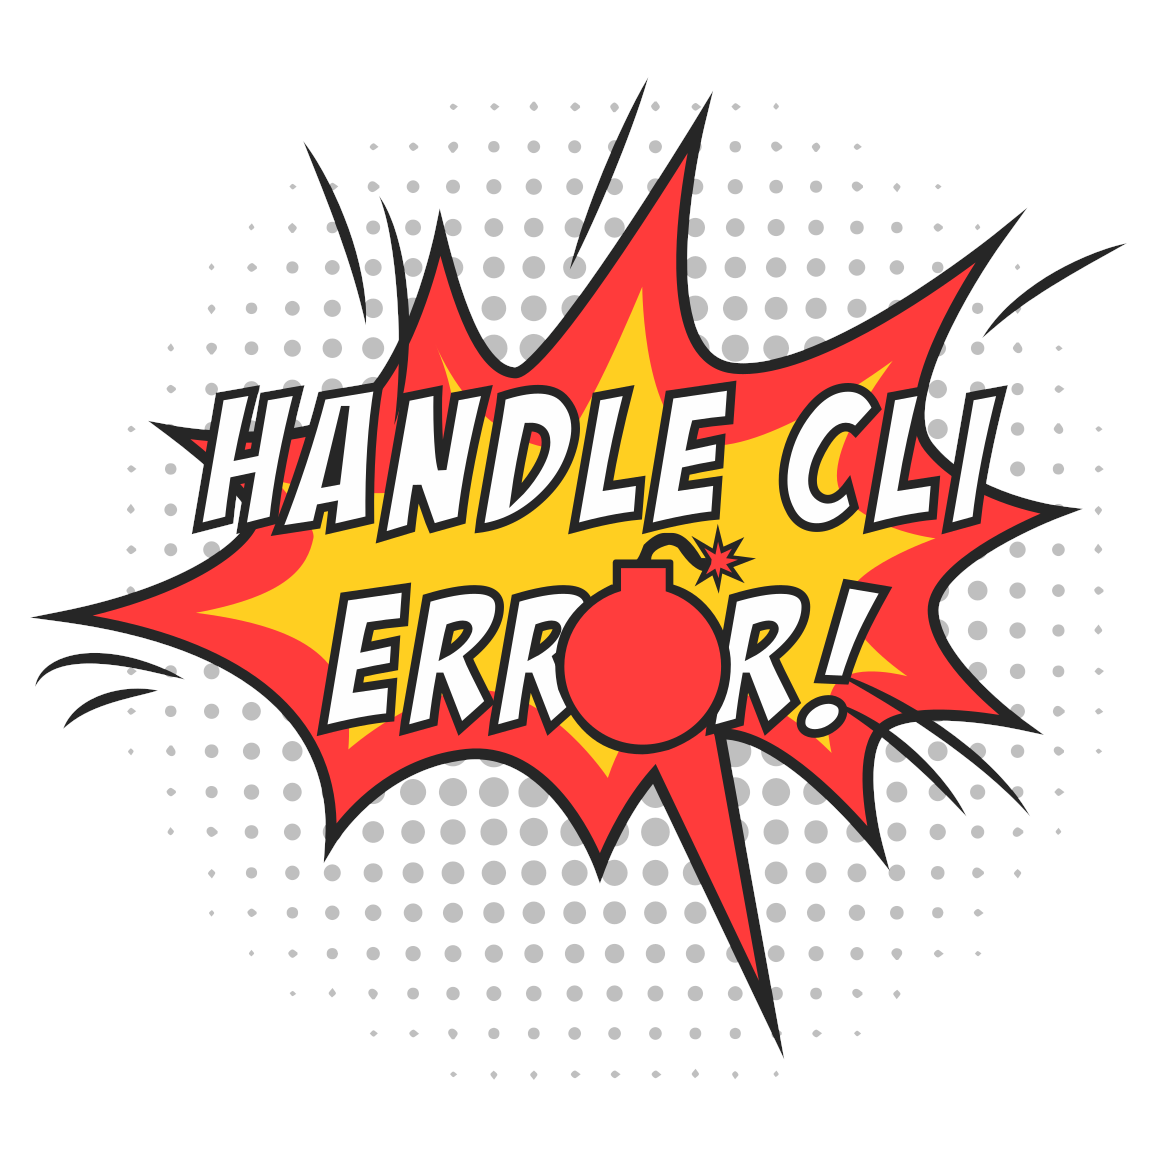 handle-cli-error